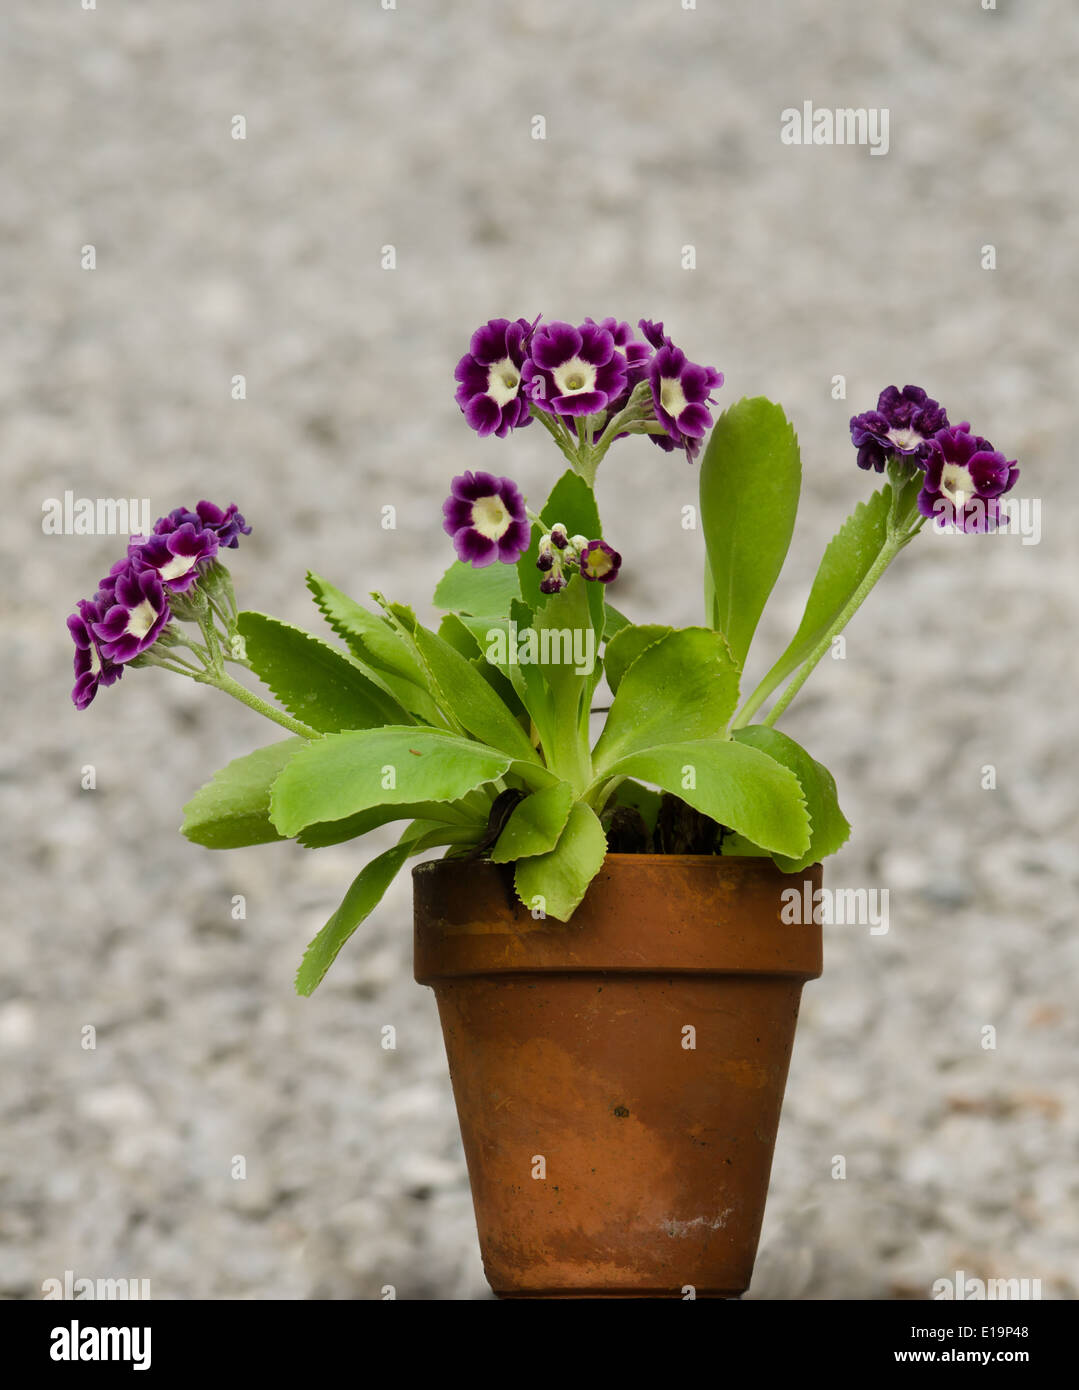 Primula auricula plant in a pot Stock Photo